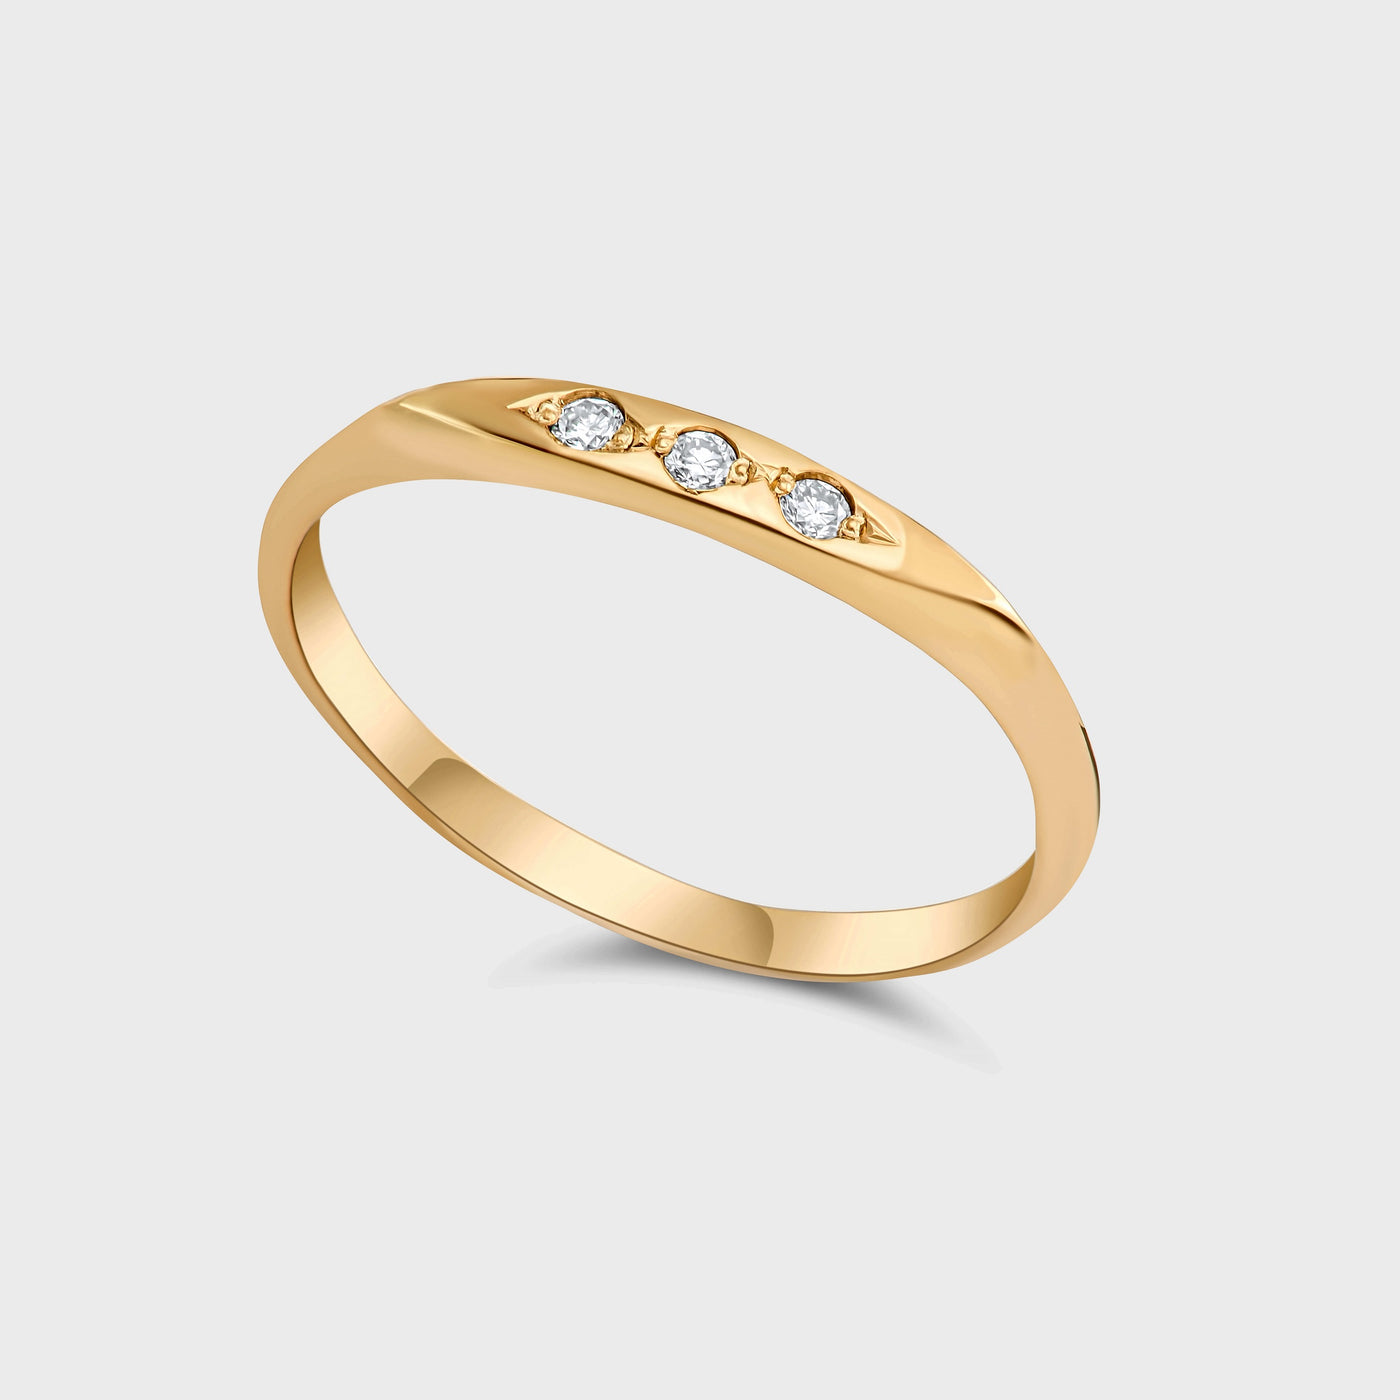 Small Kelly Ring 14K Gold White Diamonds Rings 